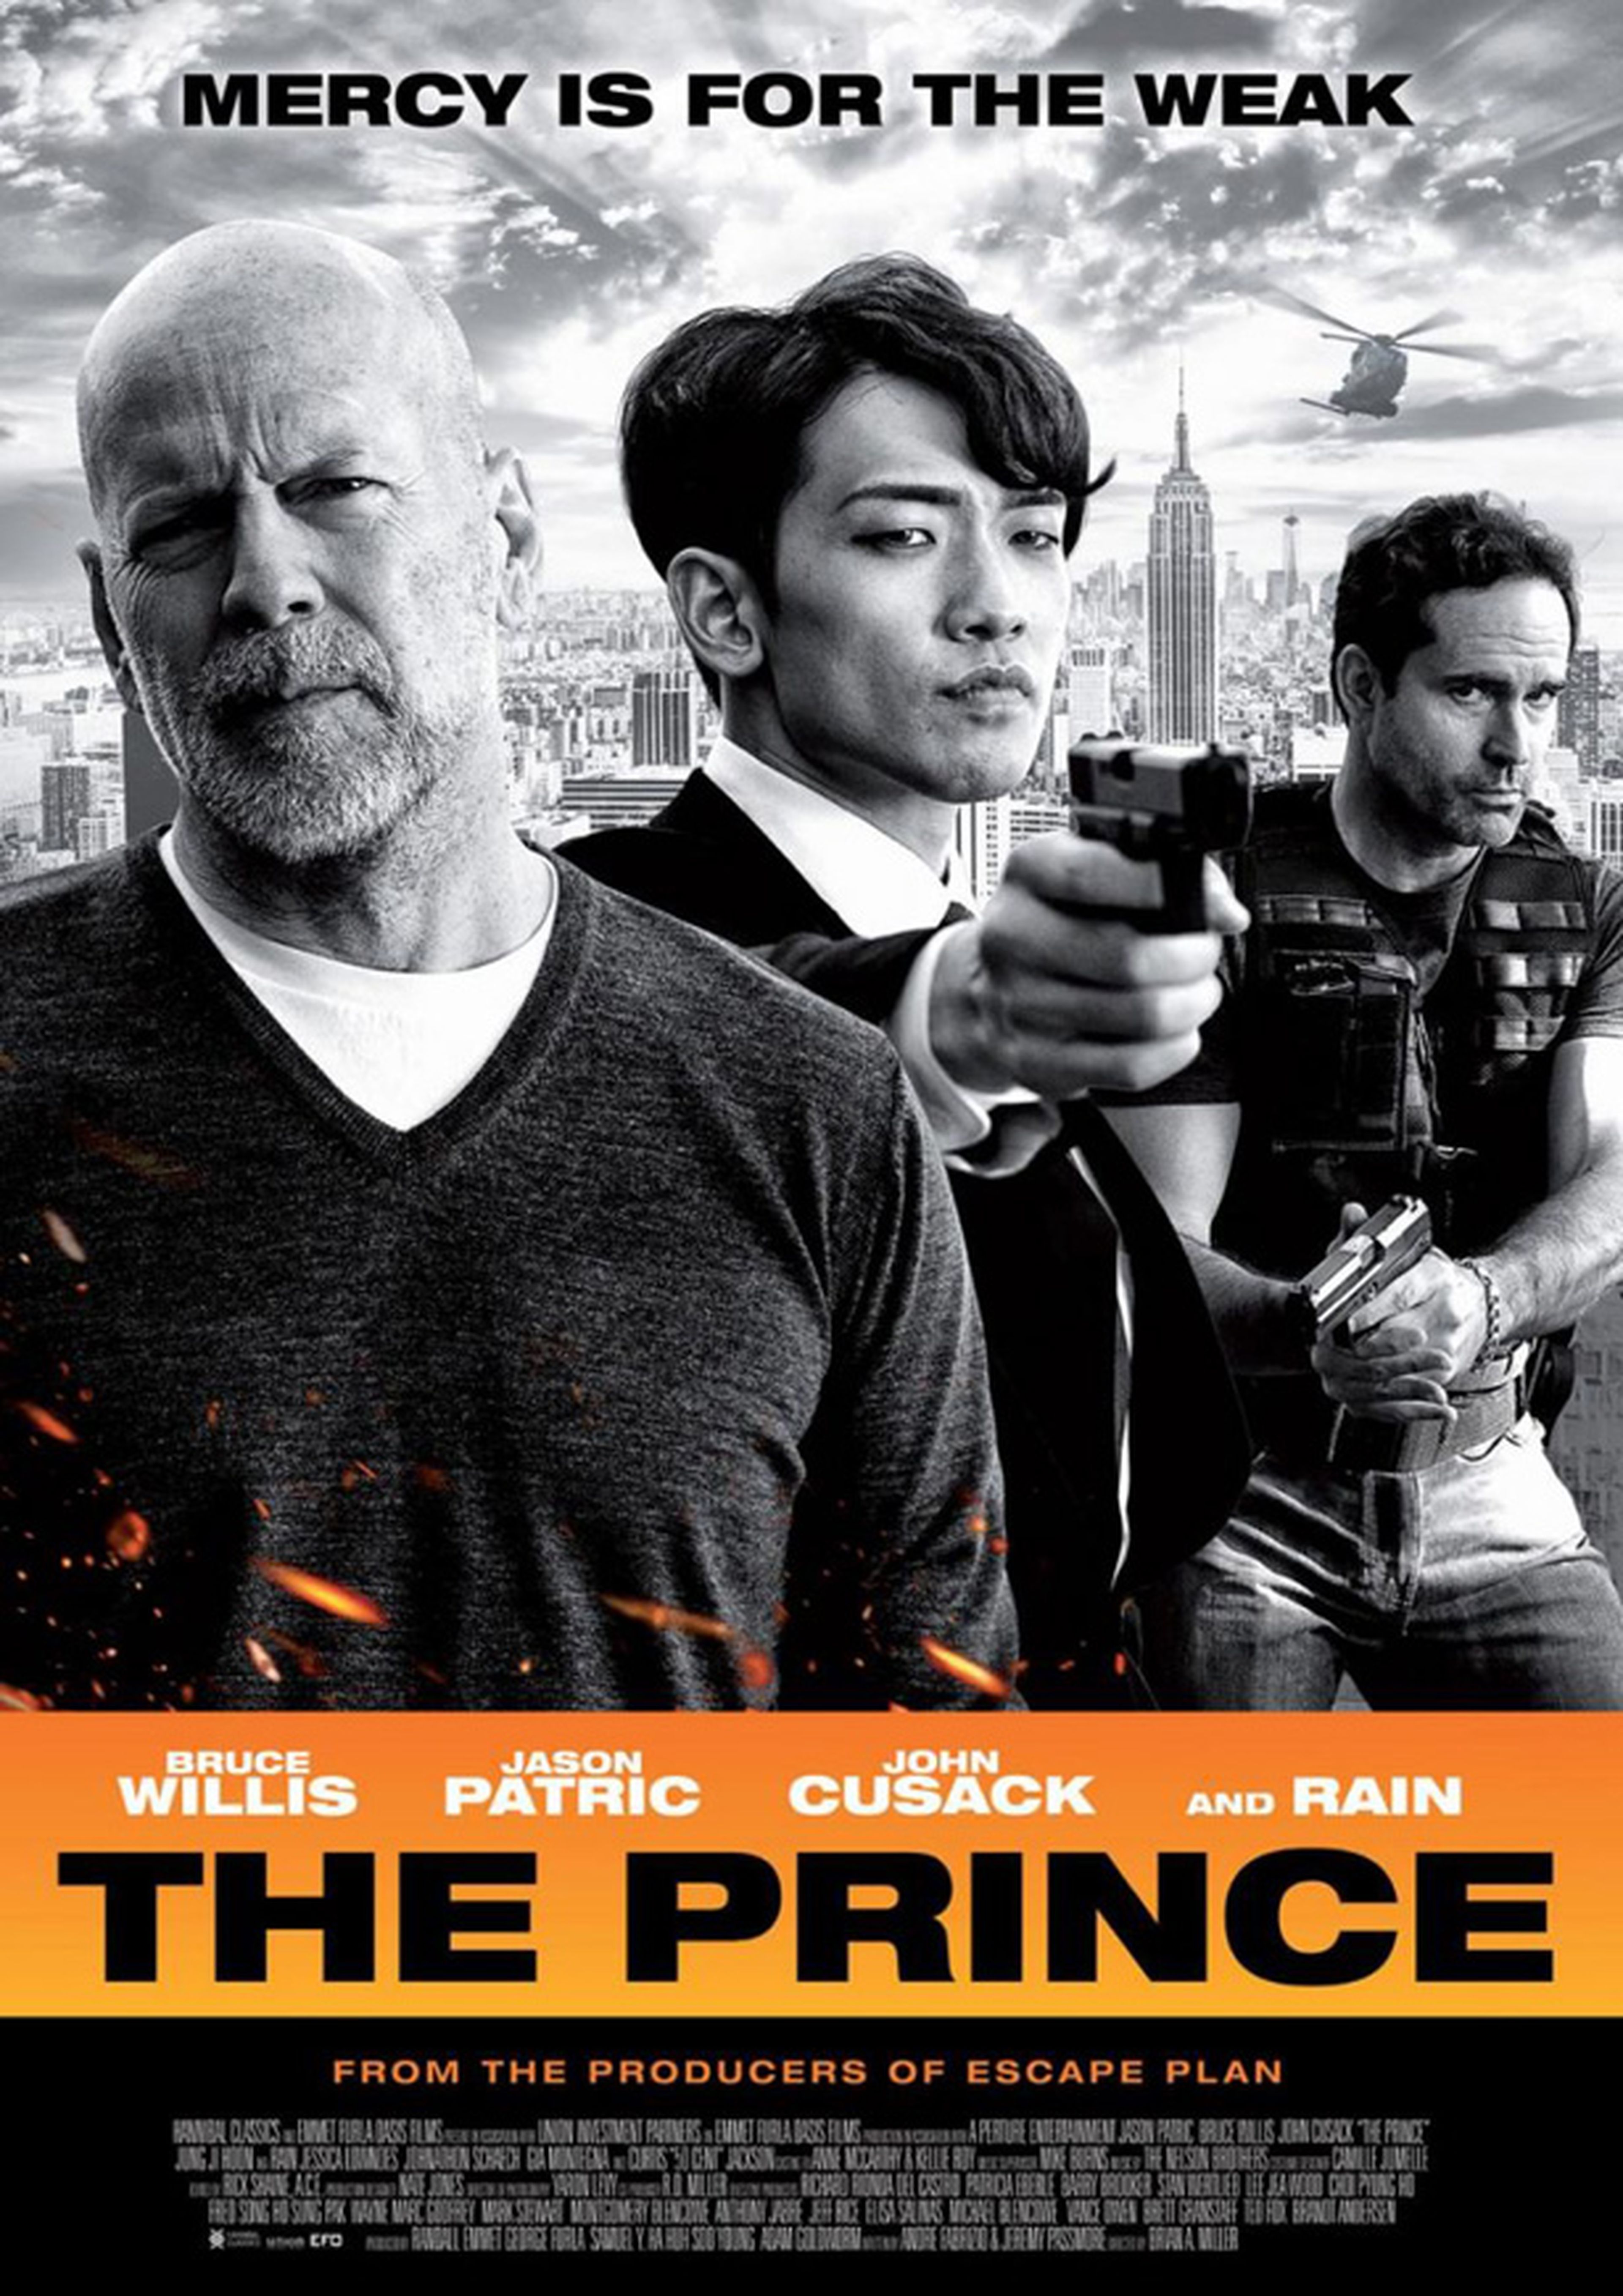 Bruce Willis busca venganza en The Prince